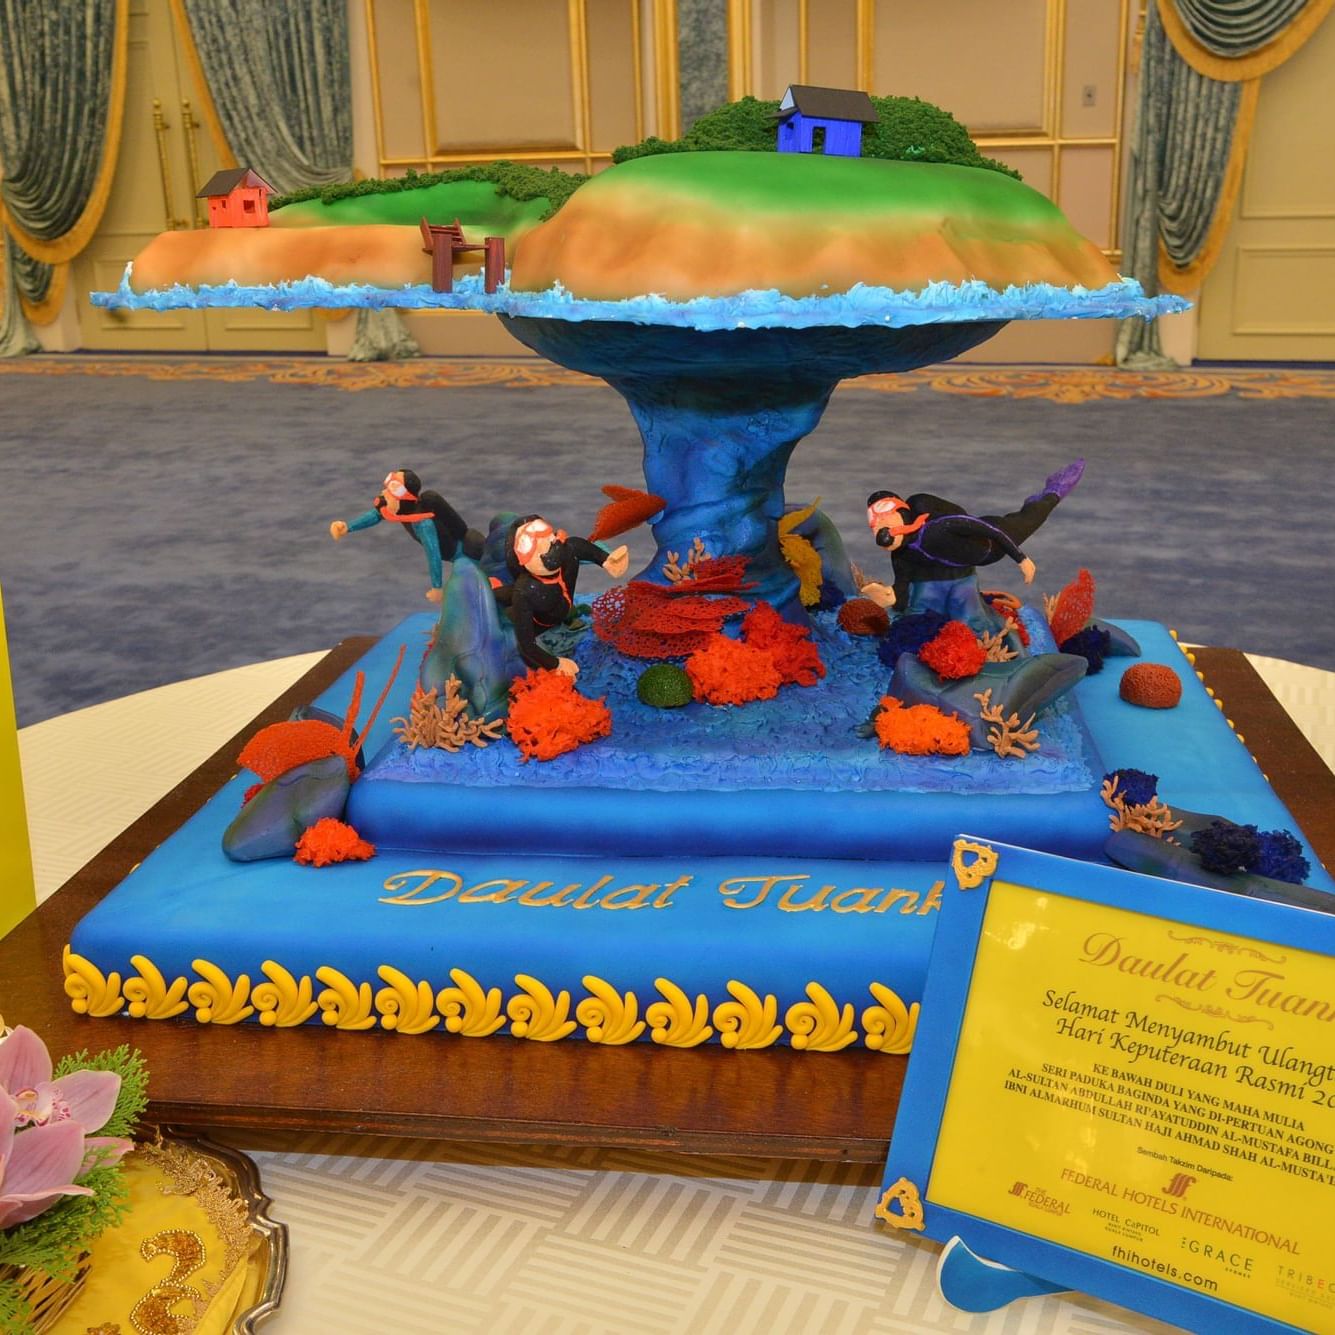 Close-up of a cake presentation, Federal Hotels International